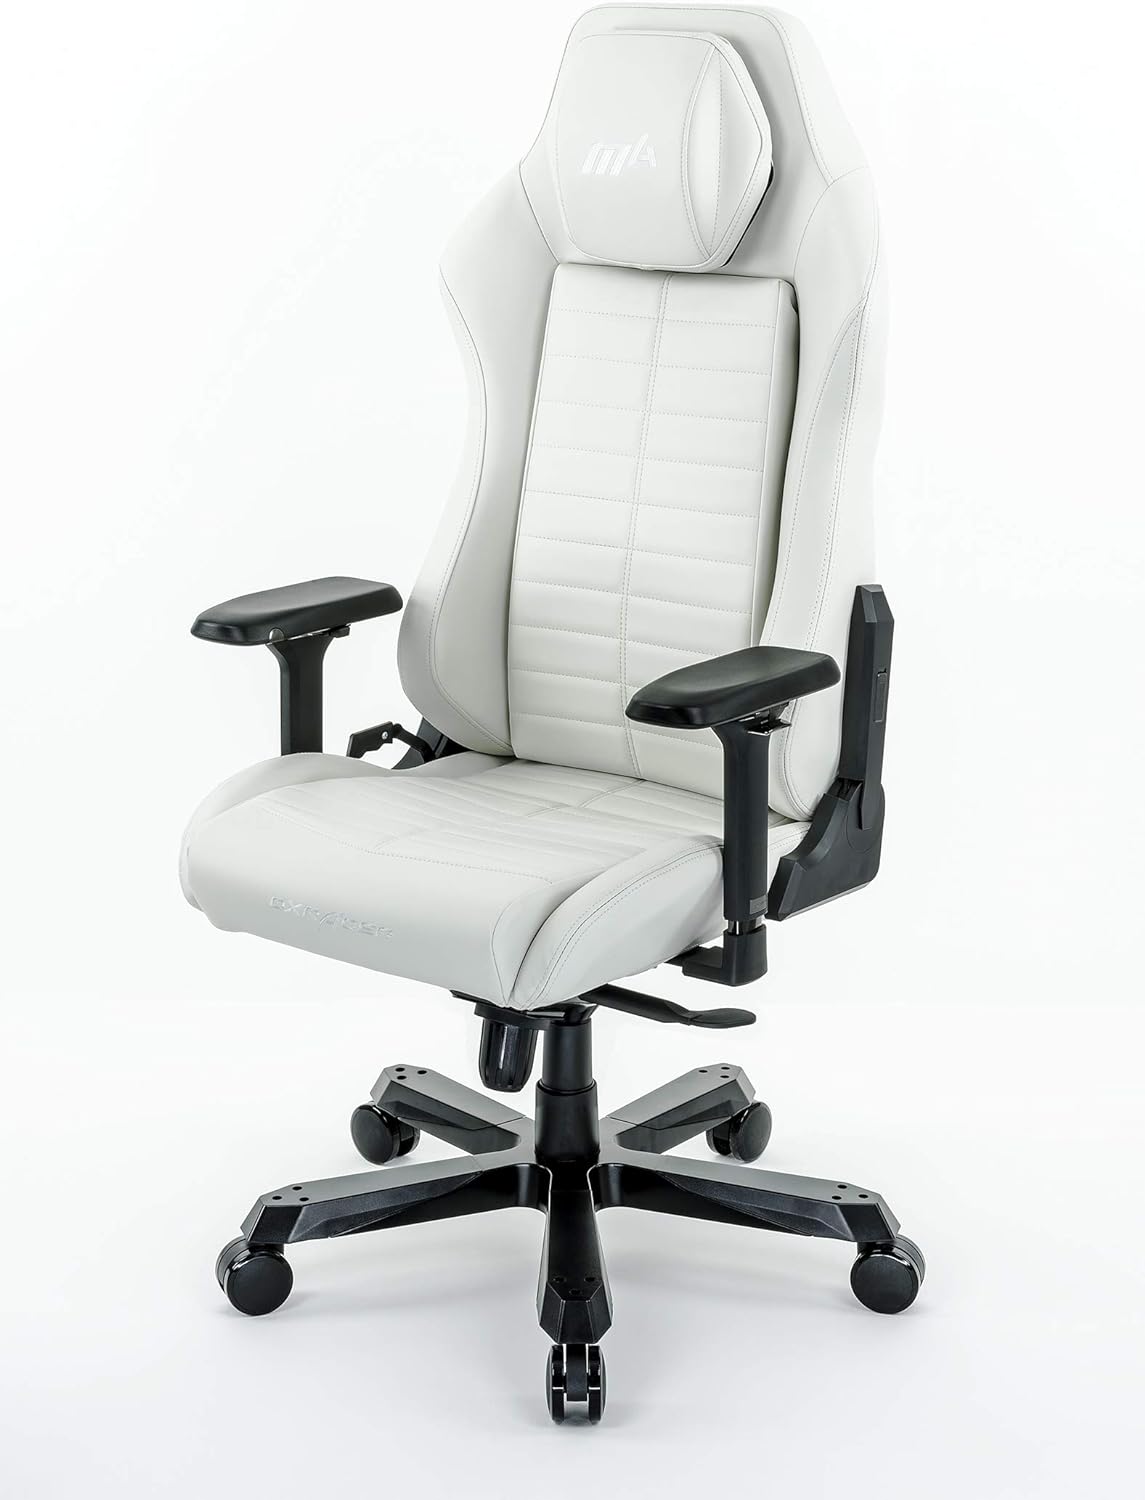 Stylish White Gaming Chair - SKU: 0810027590343